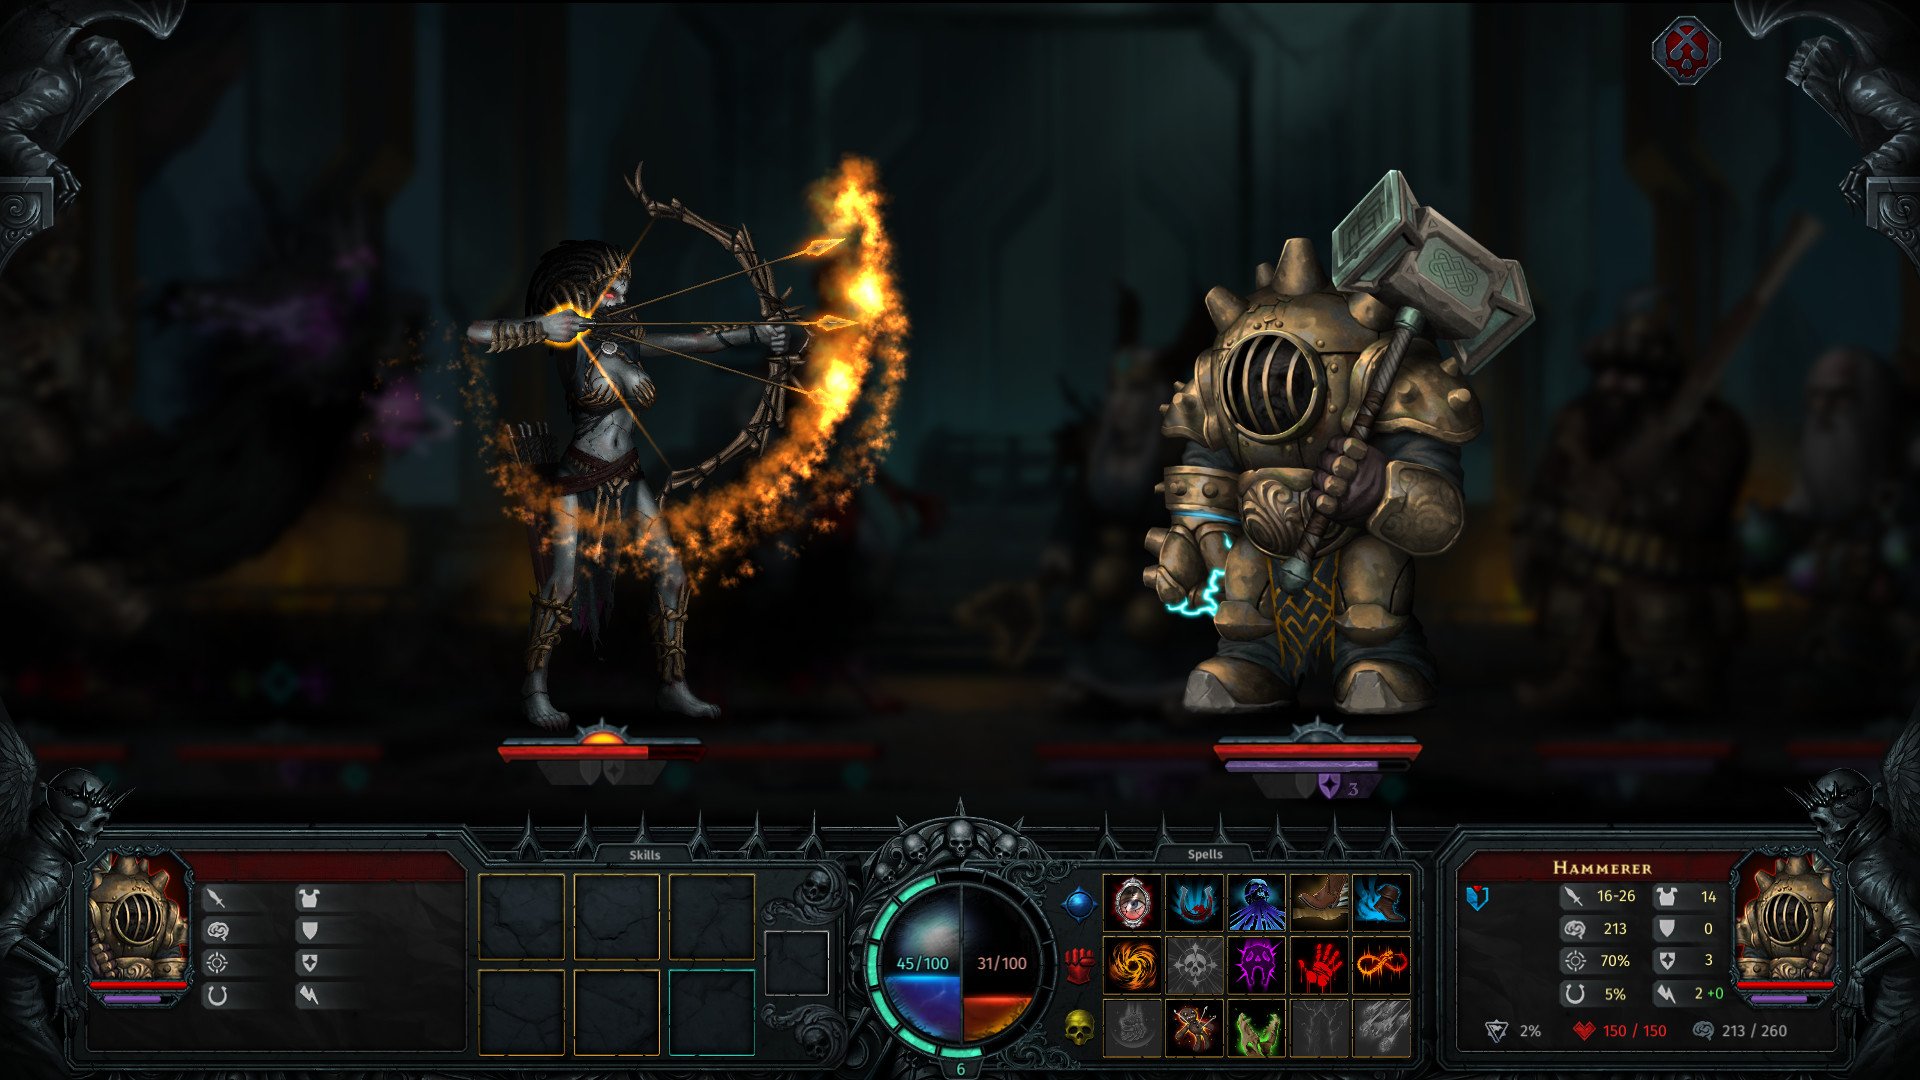 Скриншот 2 к игре Iratus Necromancer Edition (2019) PC | Лицензия